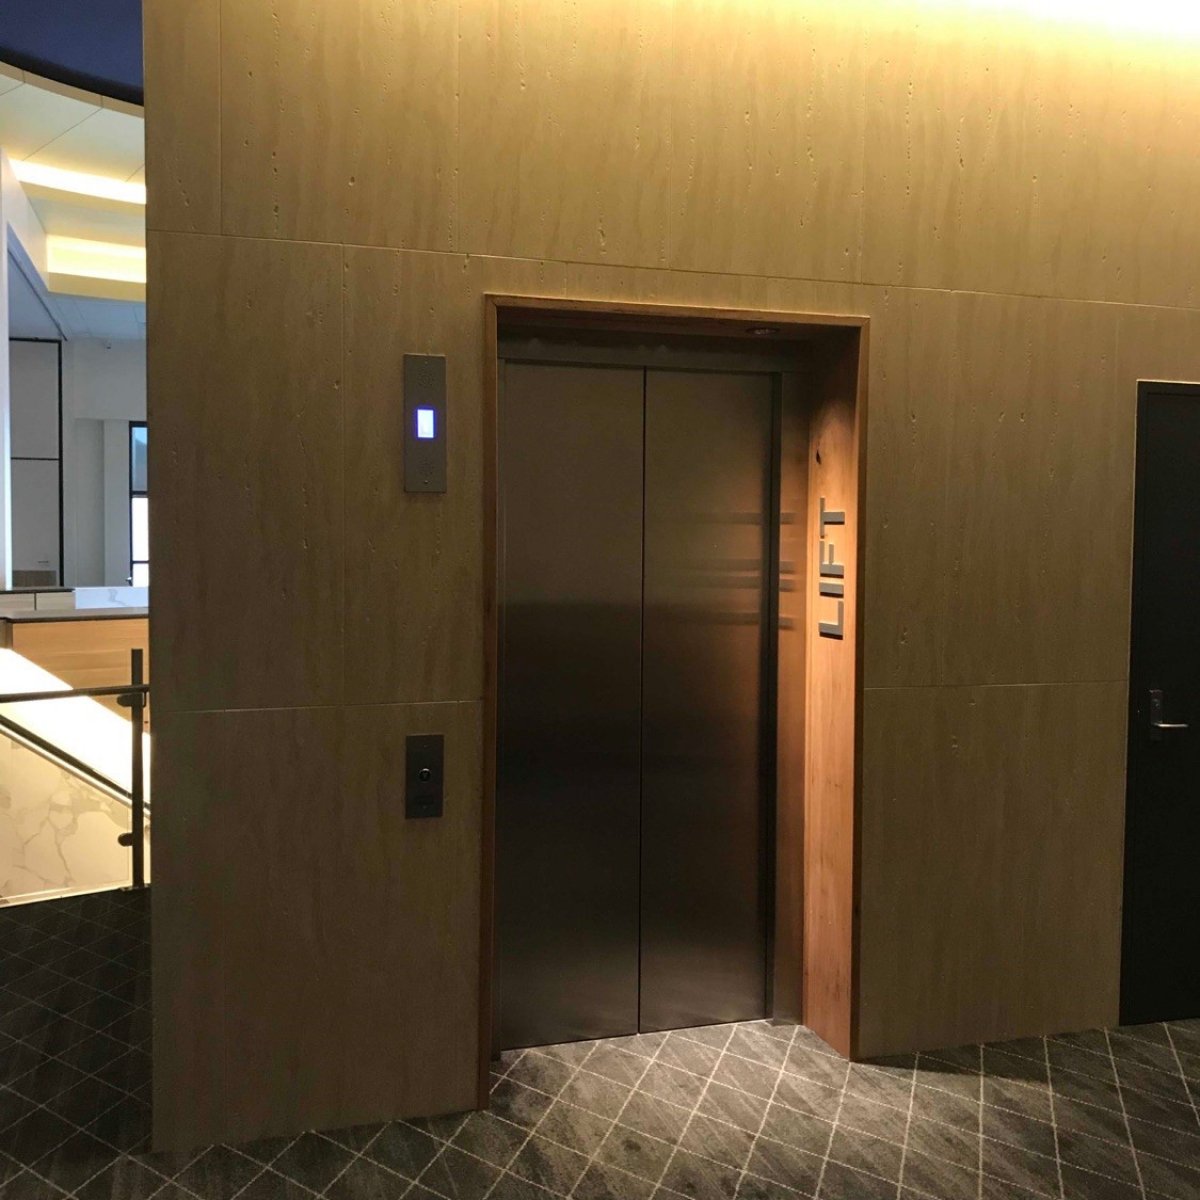  Commercial Elevators Brisbane | Simplex Elevators Gallery Image 8